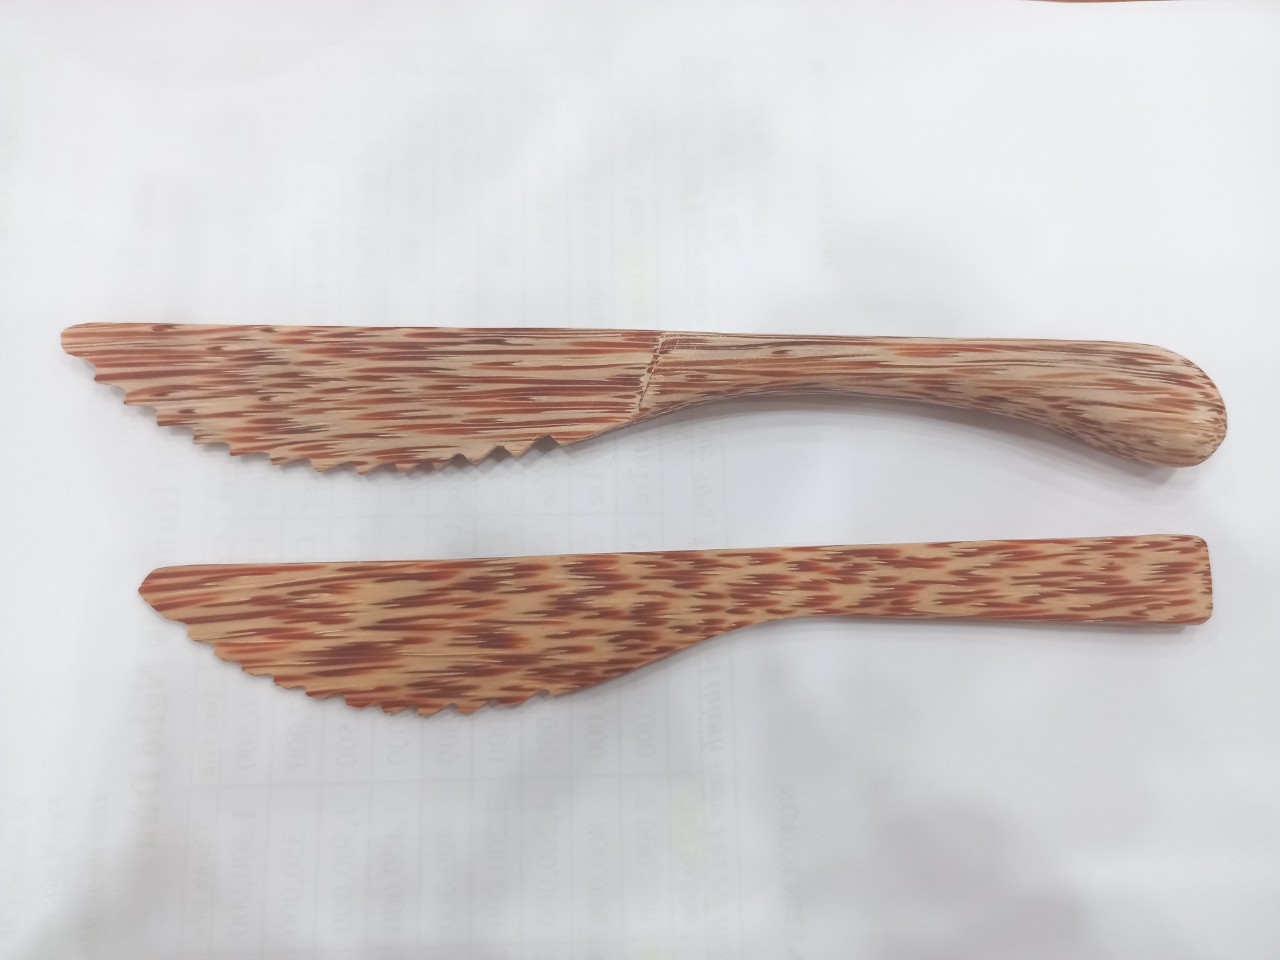 Dao gỗ dừa 16cm - Mỹ Nghệ Dừa Nam Trang